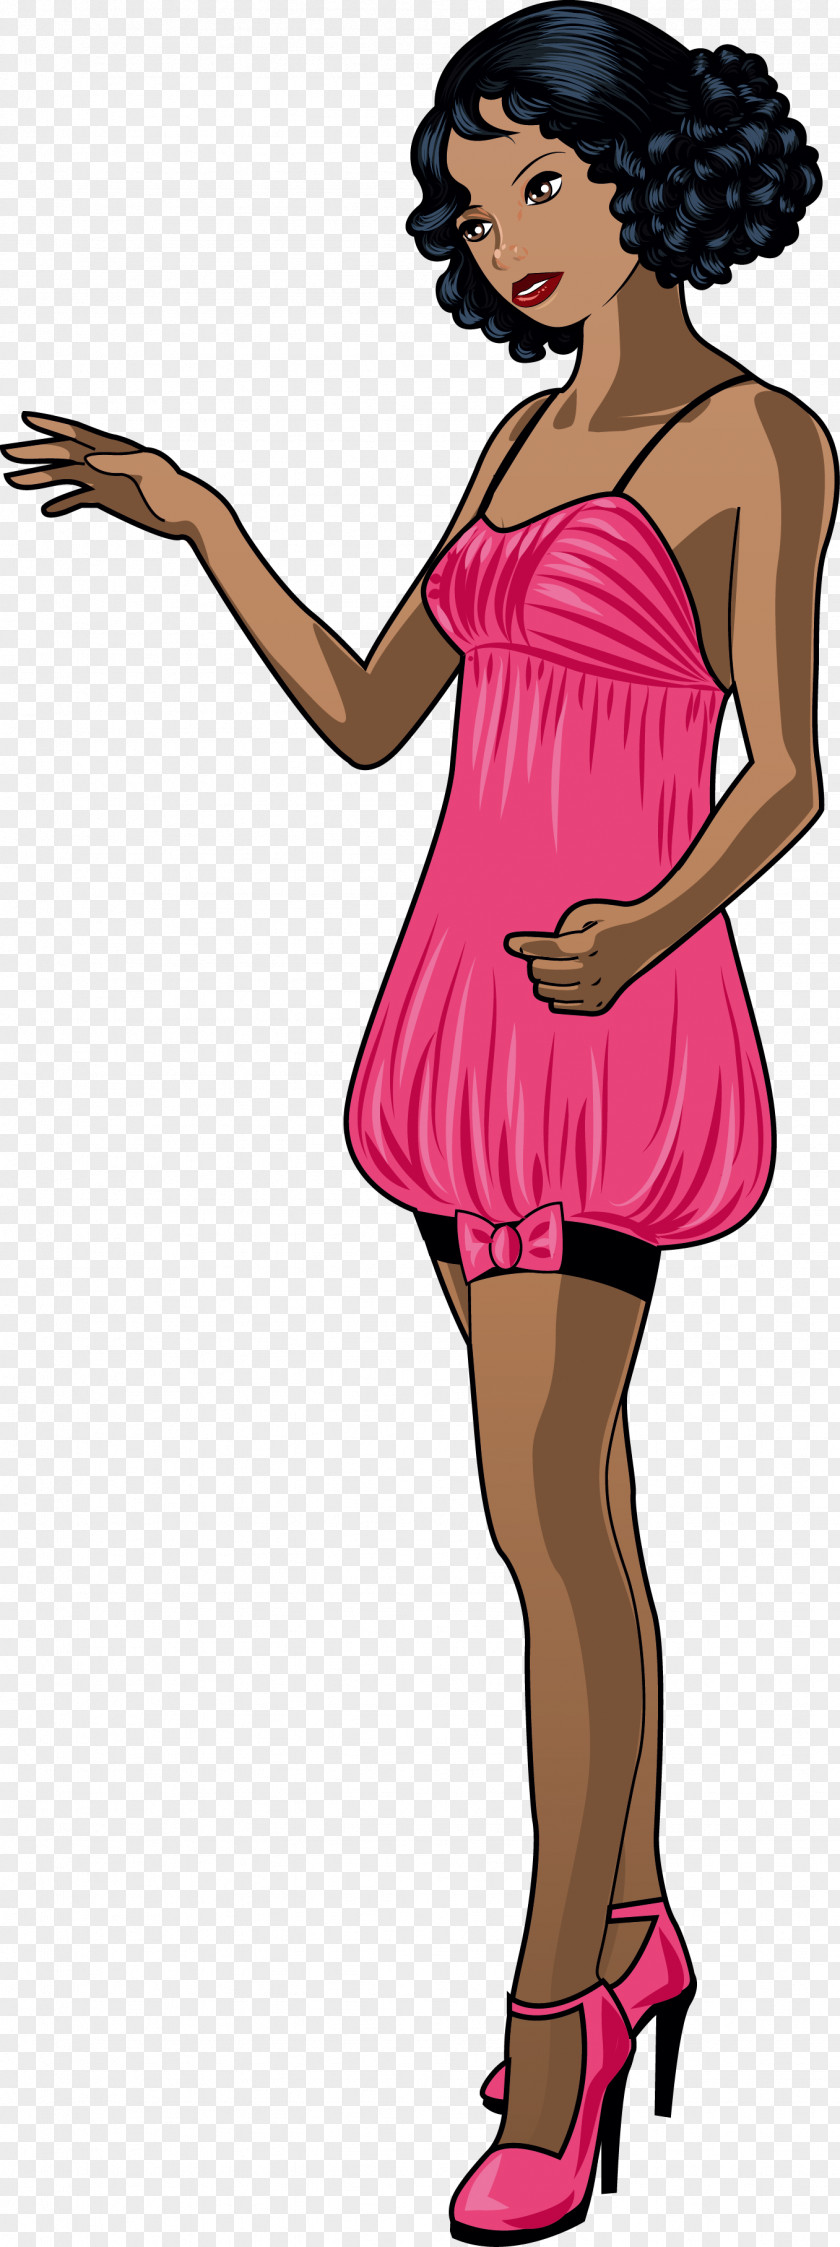 A Woman In Long Dress Cartoon Comics Illustration PNG